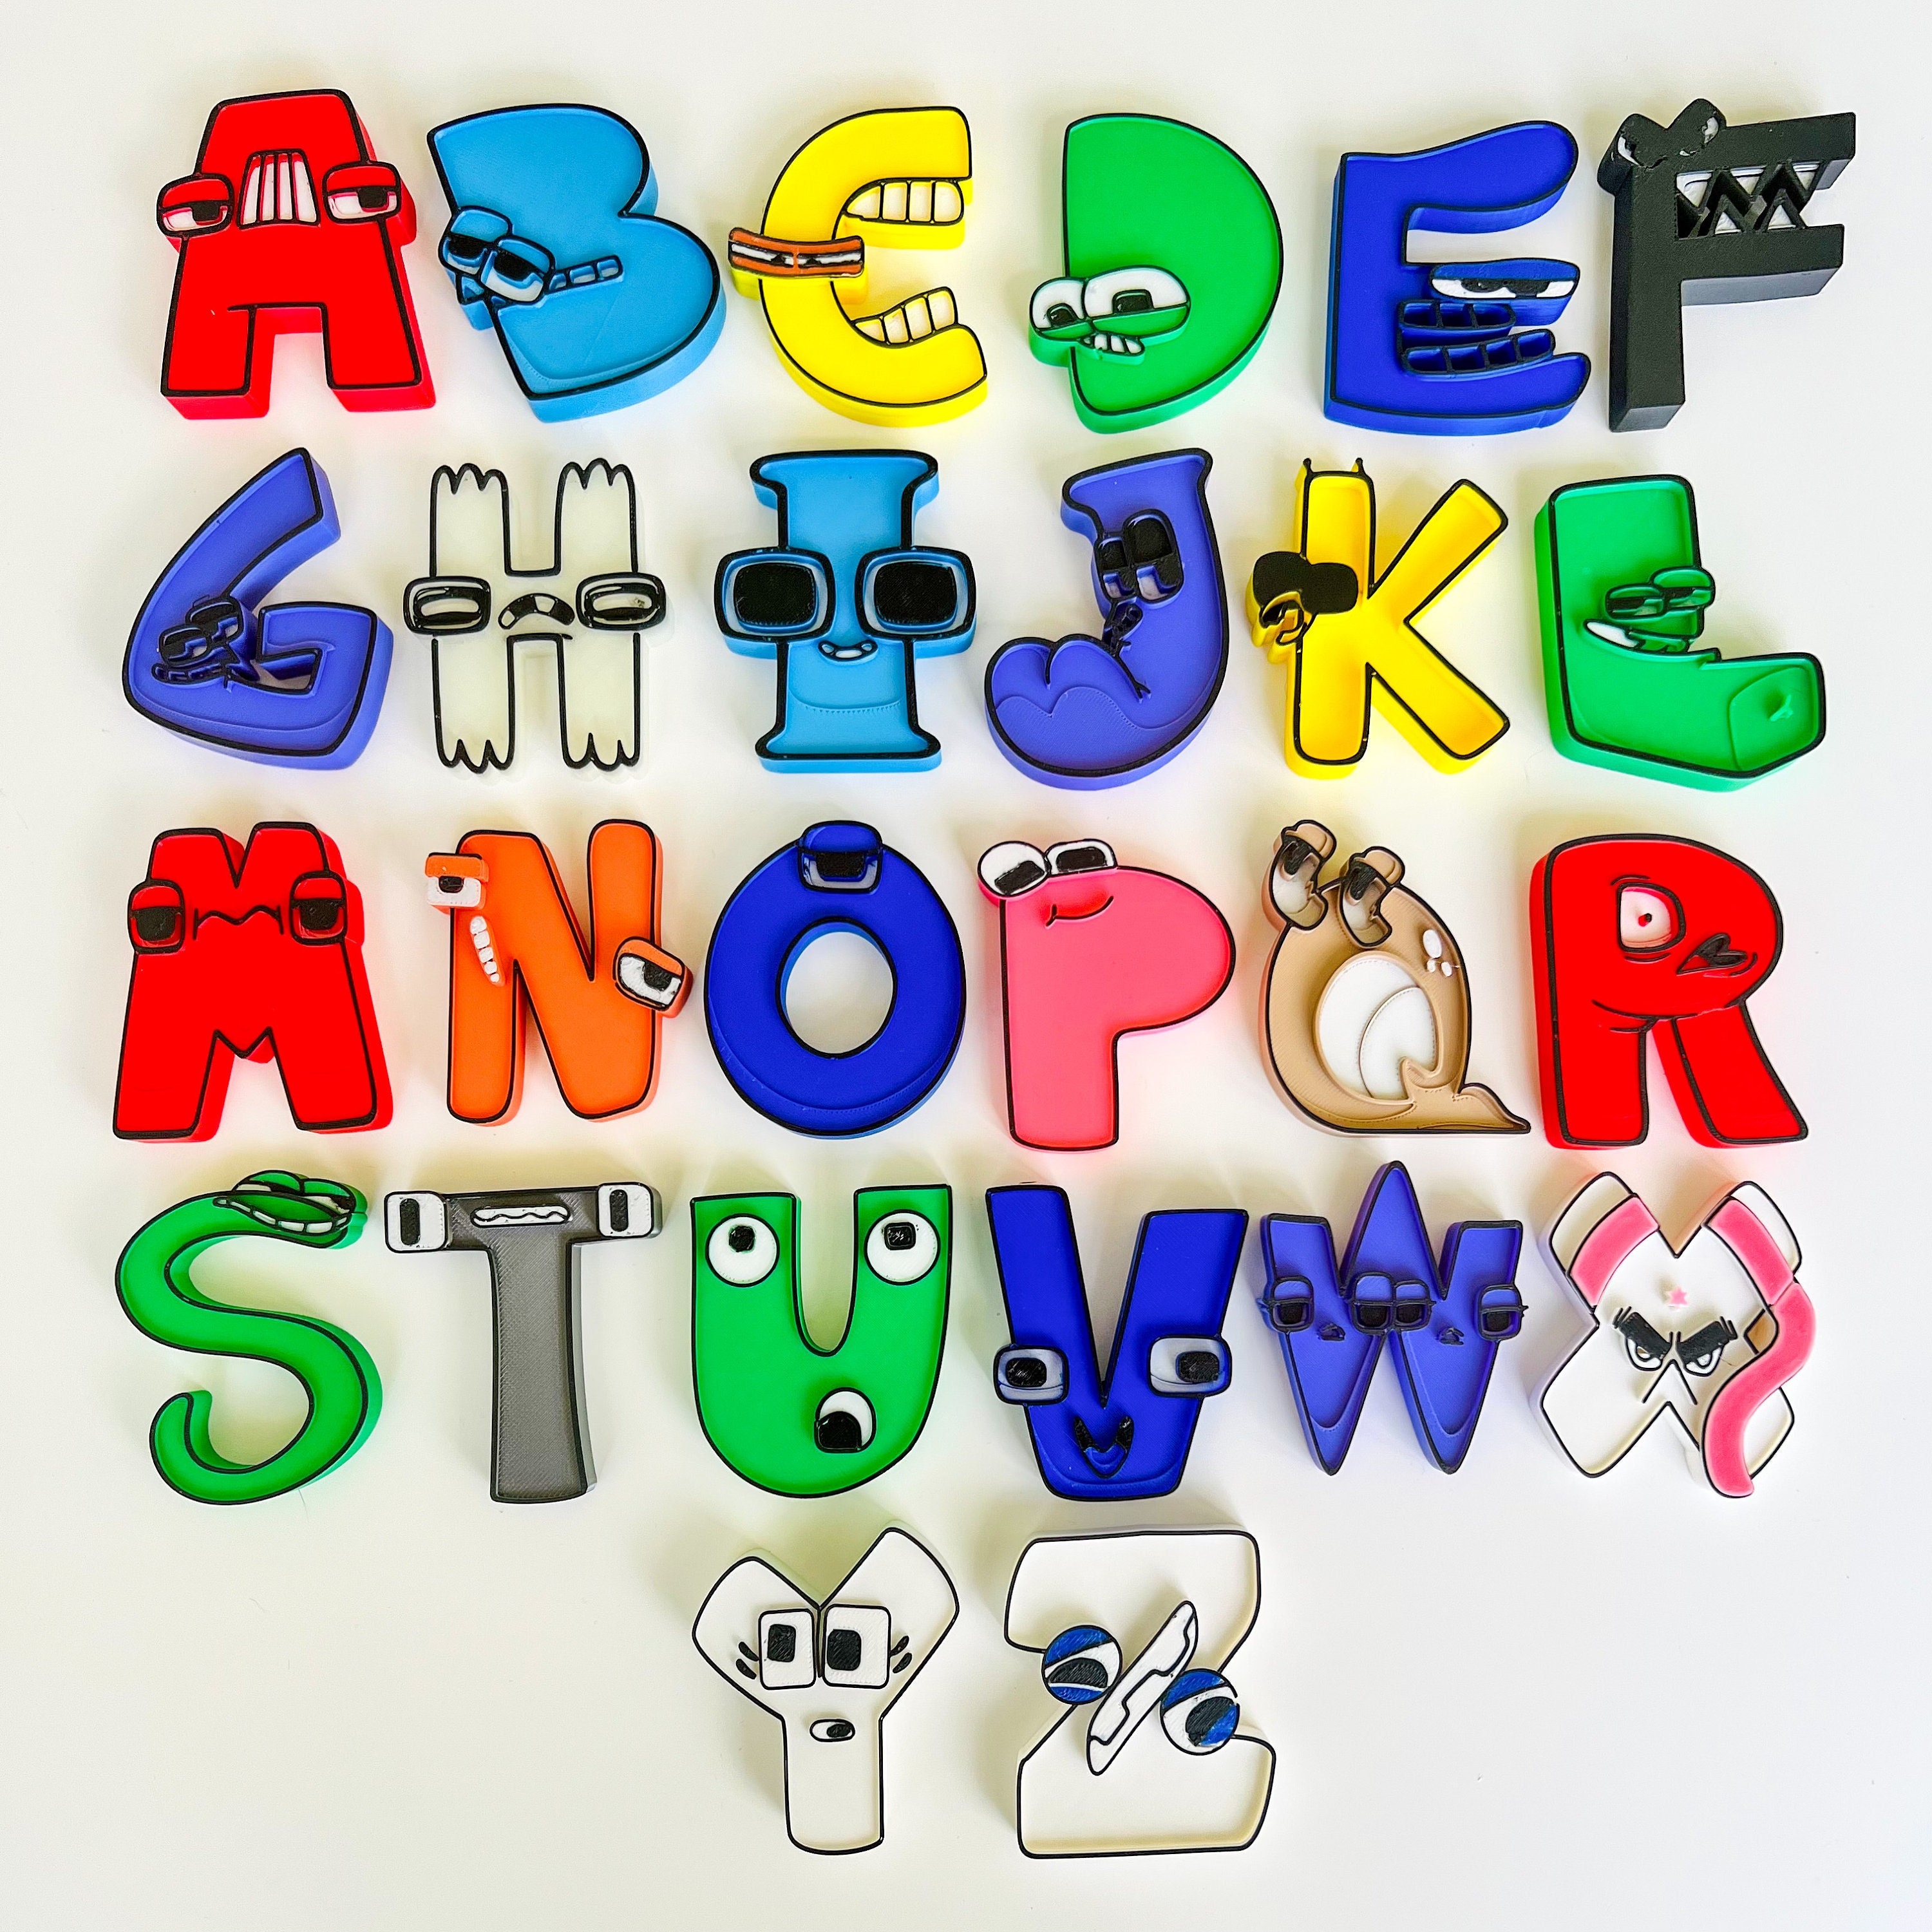 Alphabet Lore Toy Number Lore Toys Alphabet Lore Figure as 